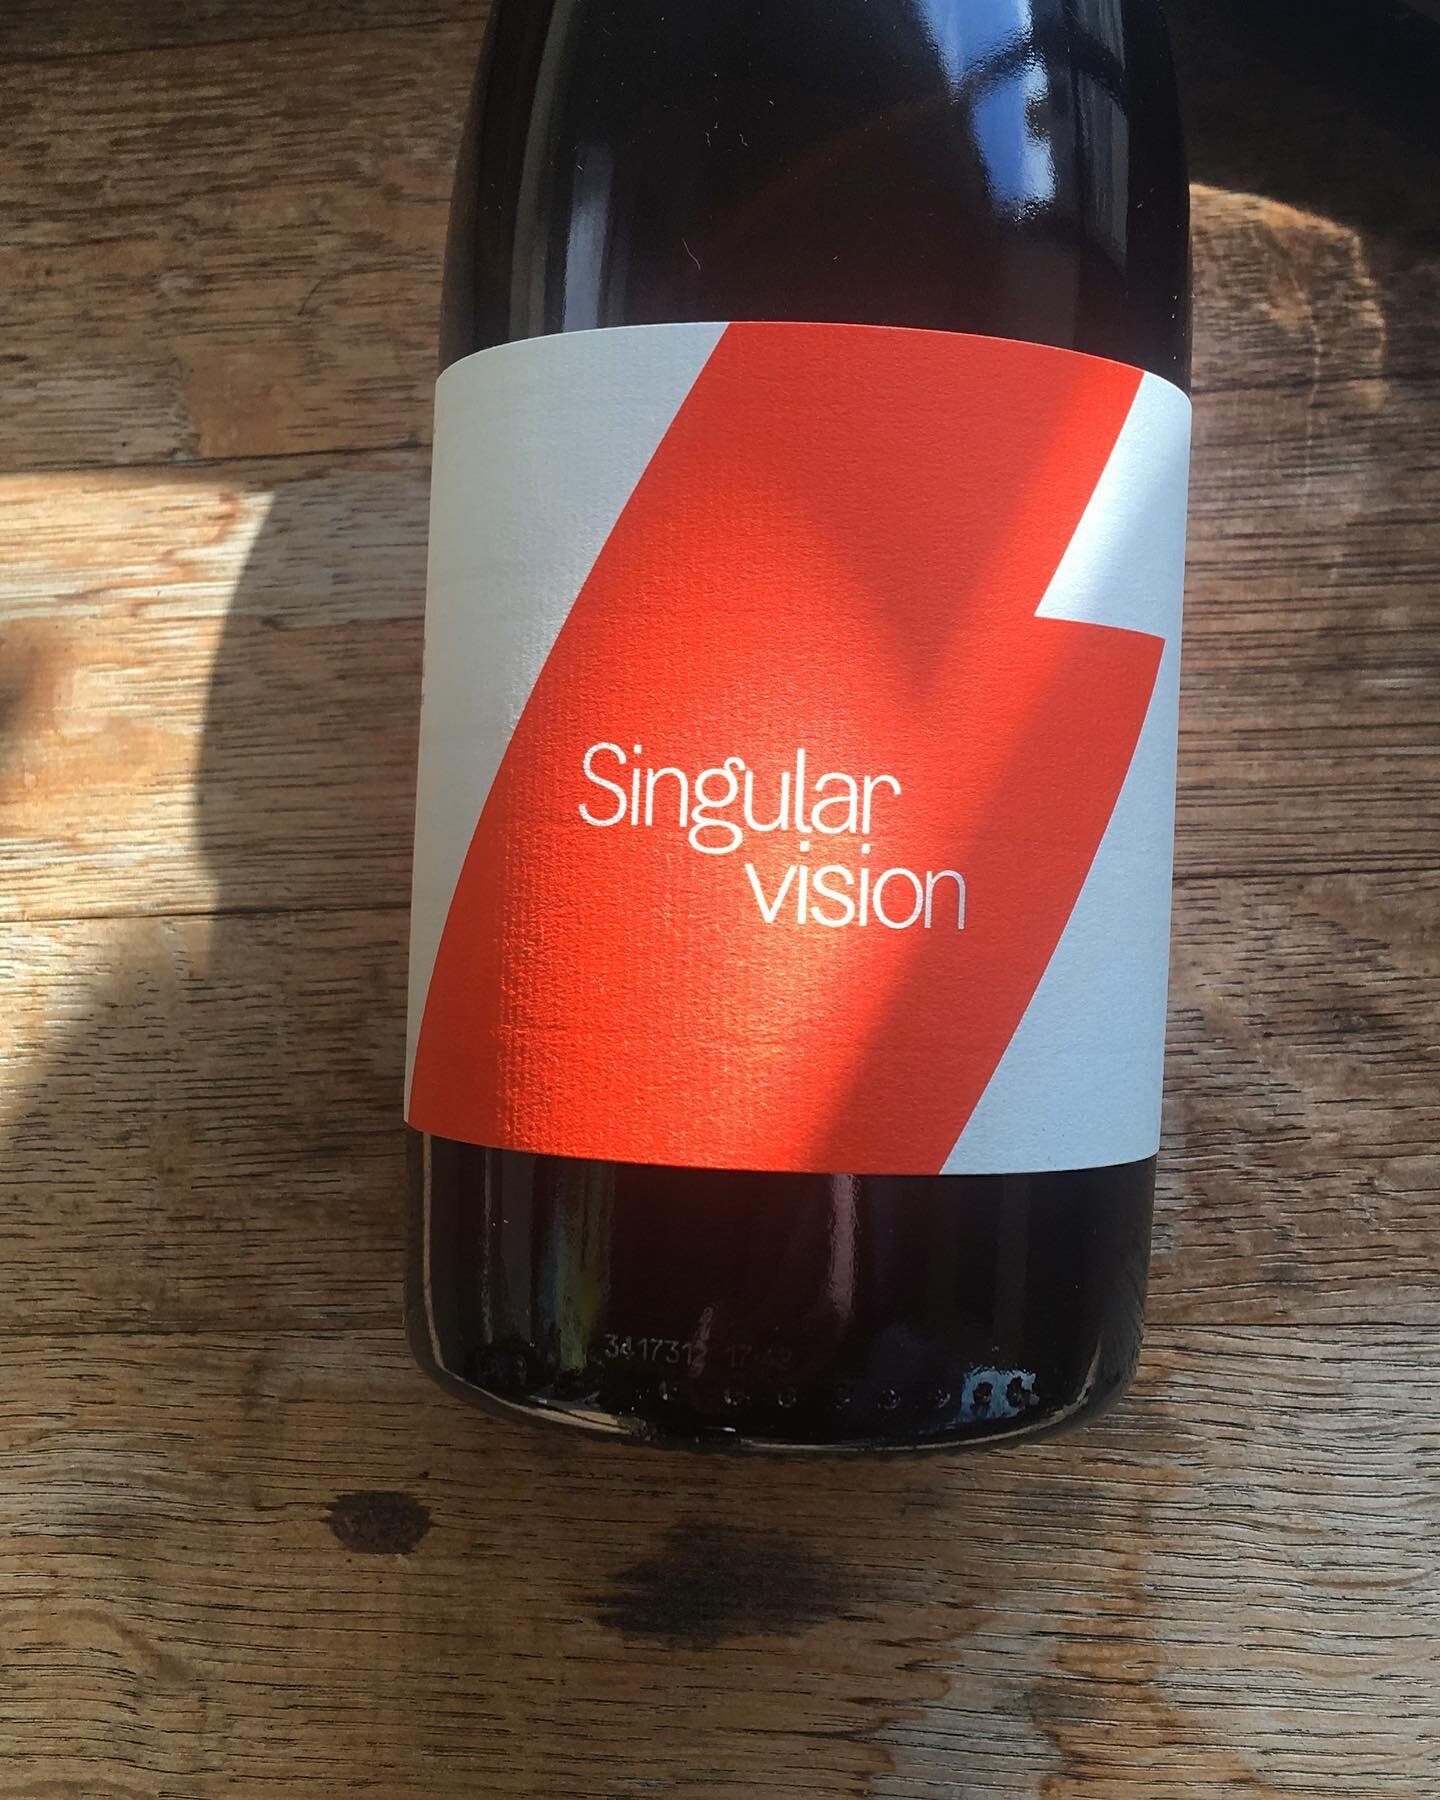 A celebration cider made for sharing. Singular Vision. ❤️ @celldivisionbrewery ❤️ @peckhamscider